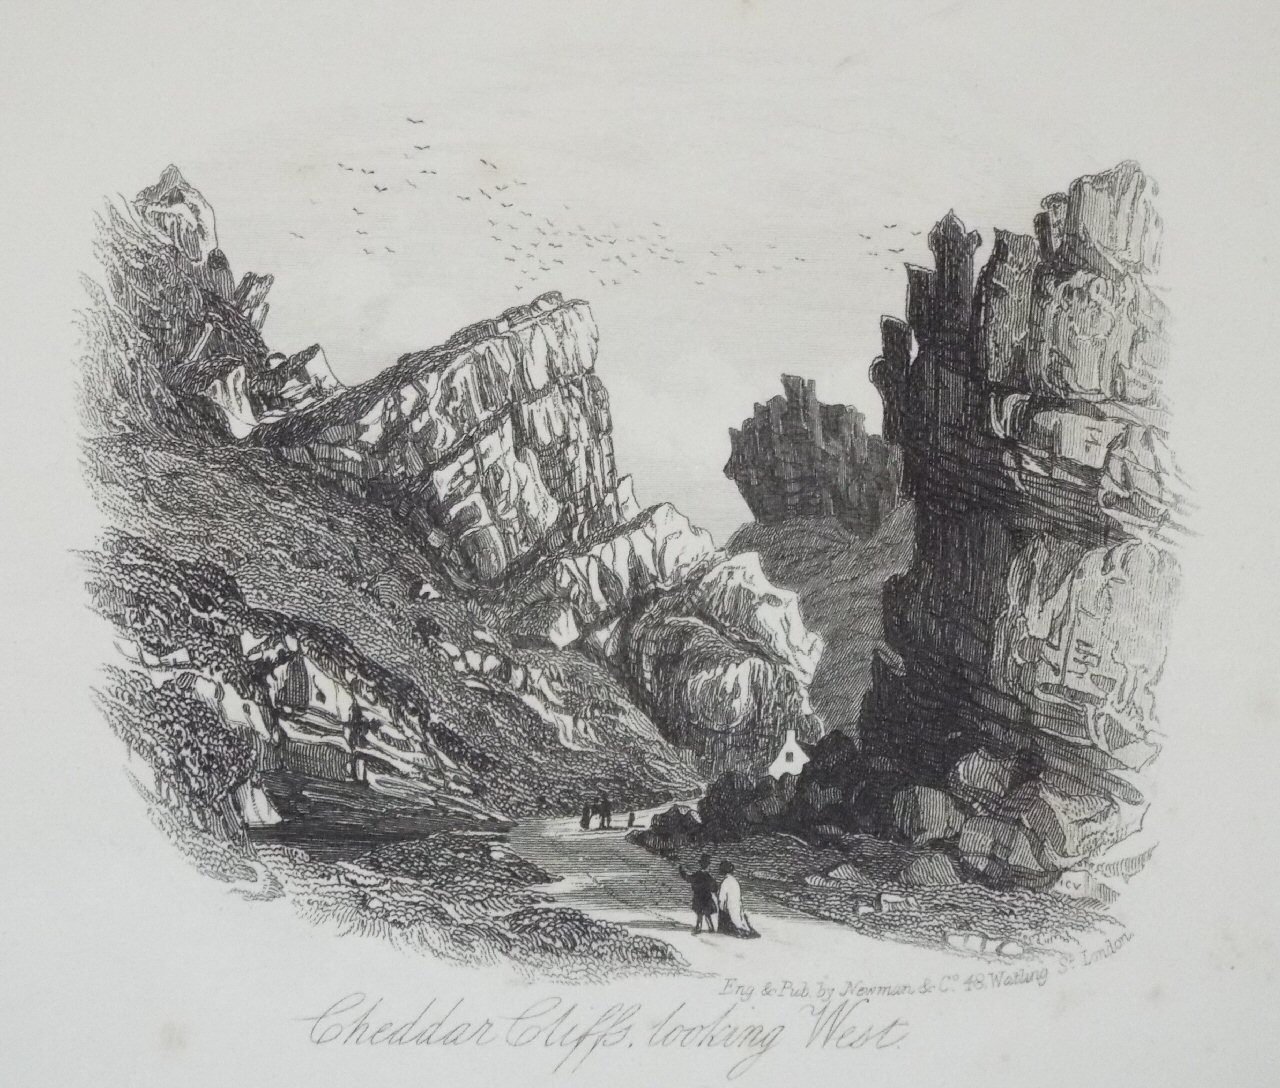 Steel Vignette - Cheddar Cliffs, looking West - Newman